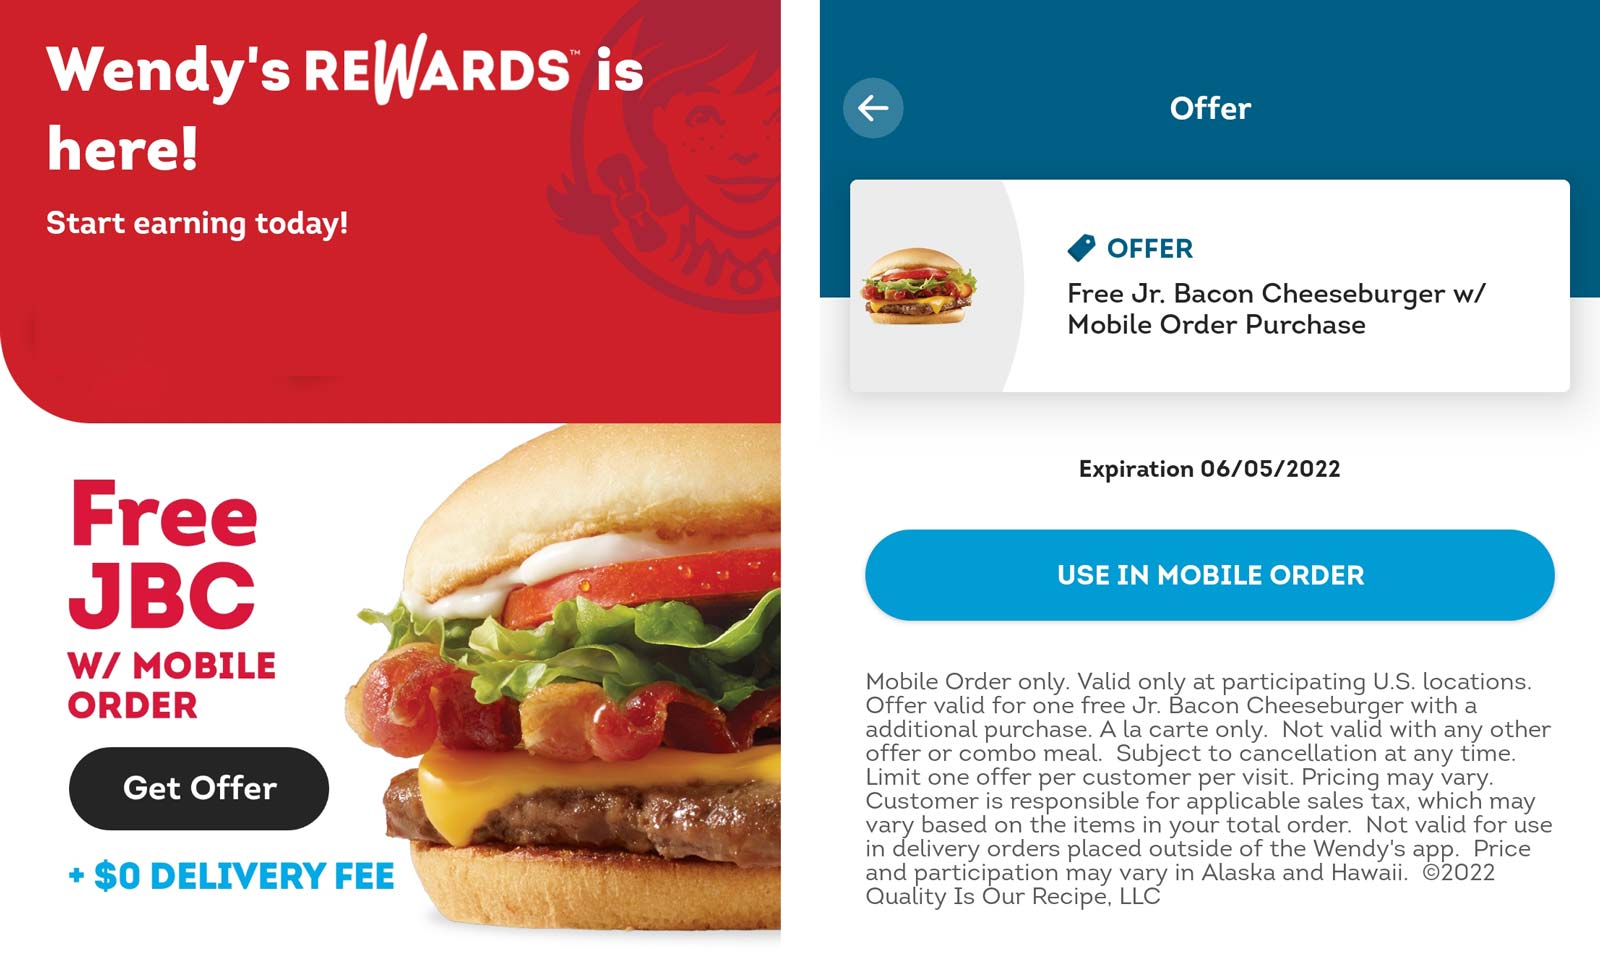 Wendys restaurants Coupon  Free junior bacon cheeseburger via mobile order rewards loggedin at Wendys #wendys 